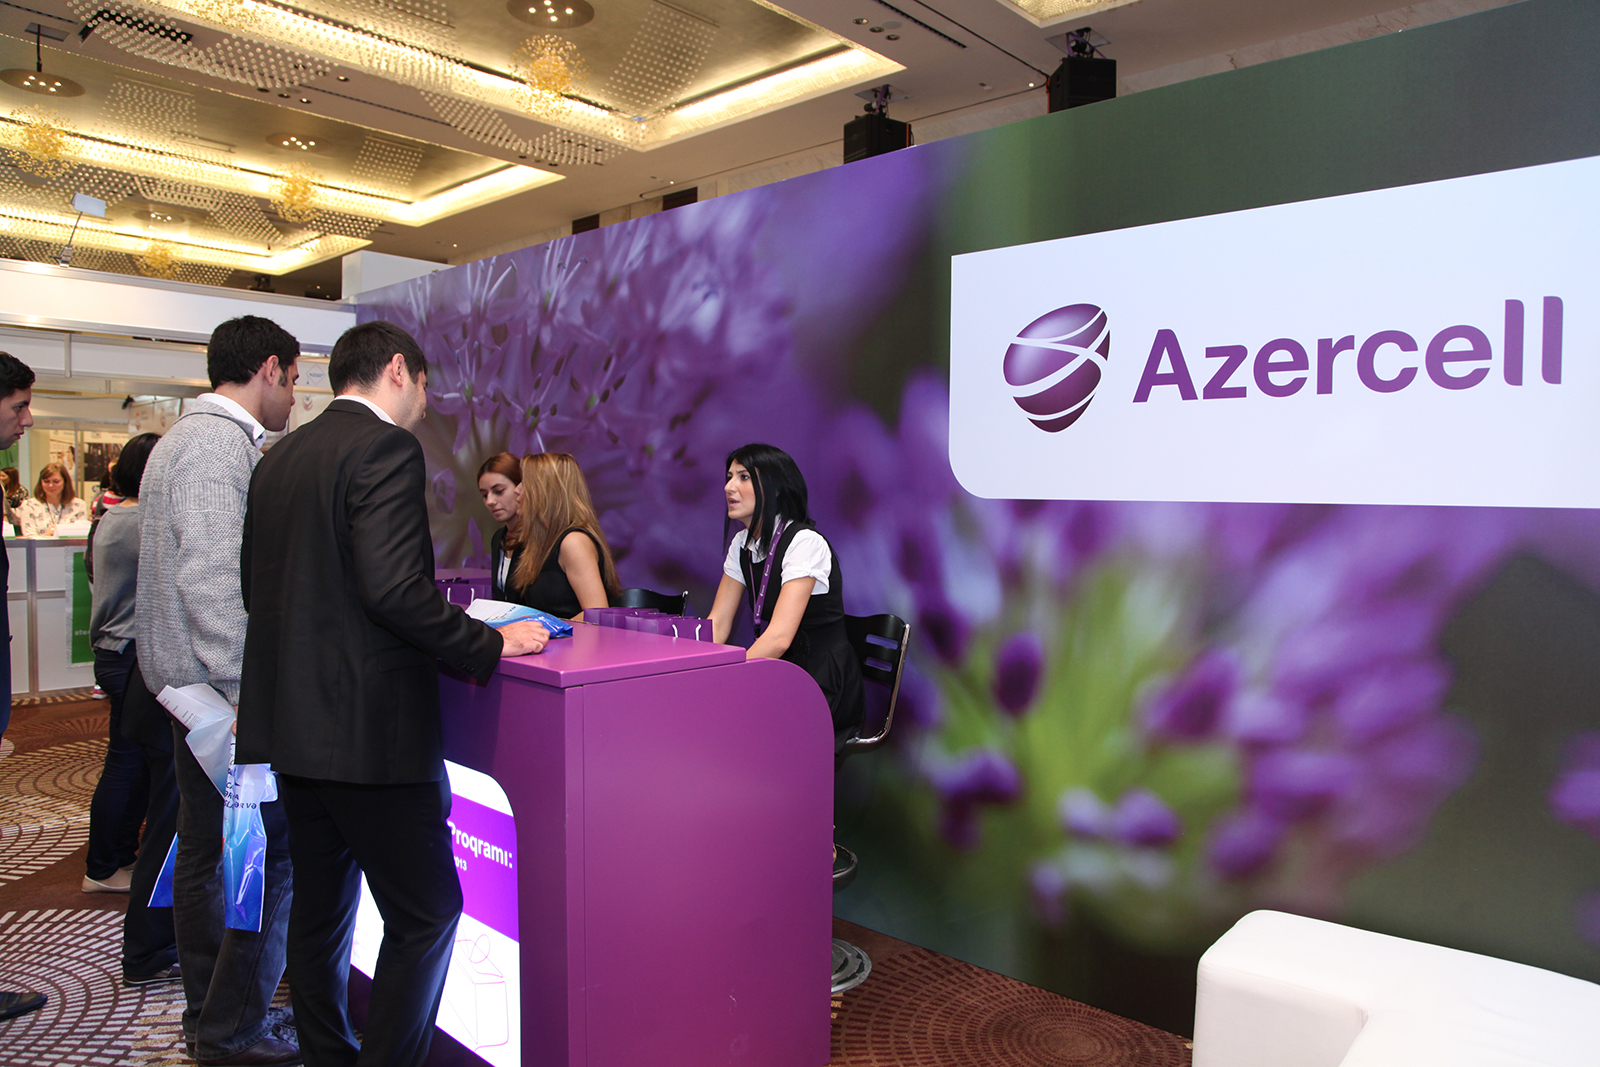 Turkcell in talks to buy TeliaSonera's shares in Azercell